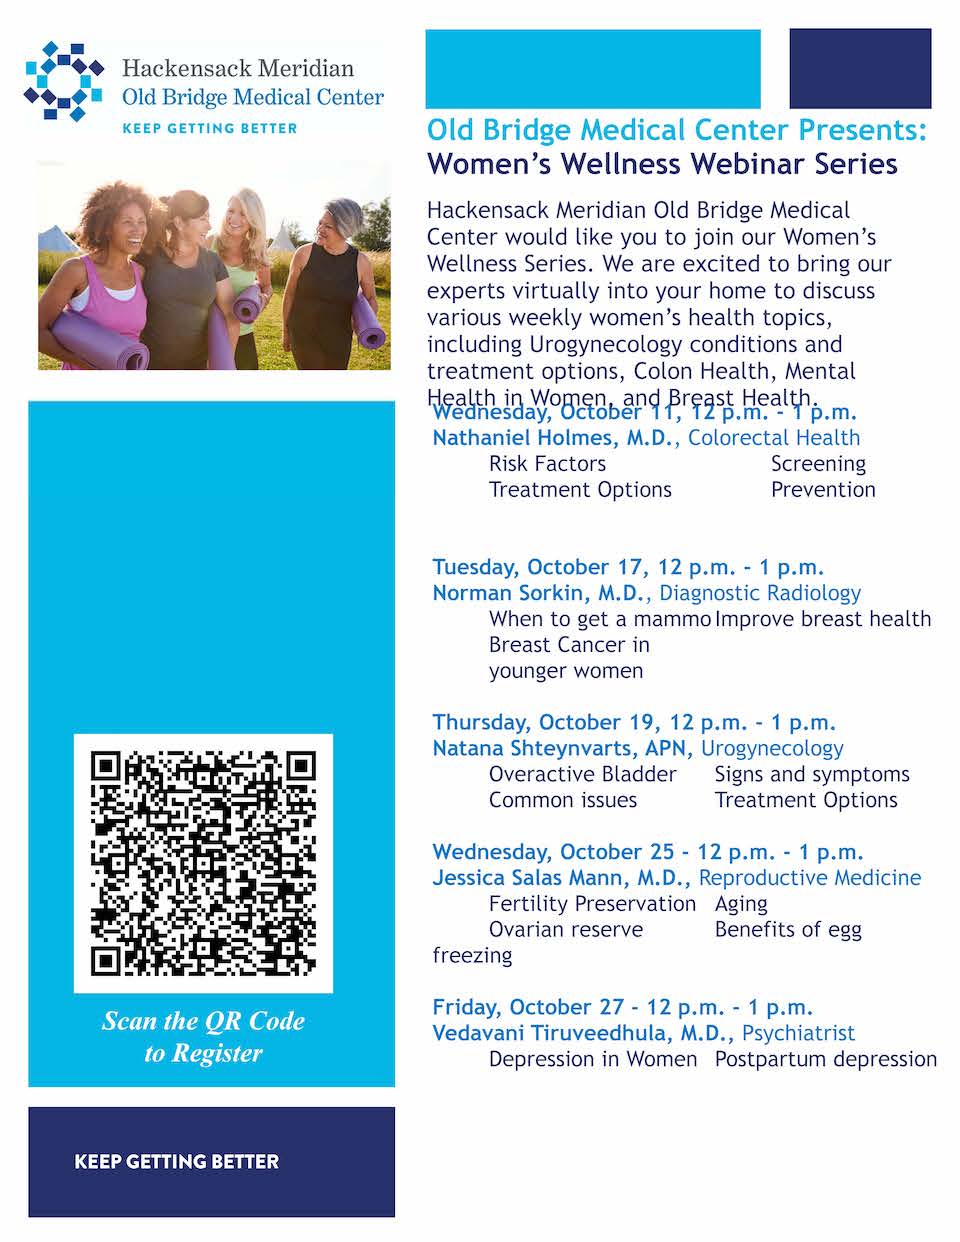 womens-wellness-Hackensack-Meridian-Old-Bridge-Medical-Center